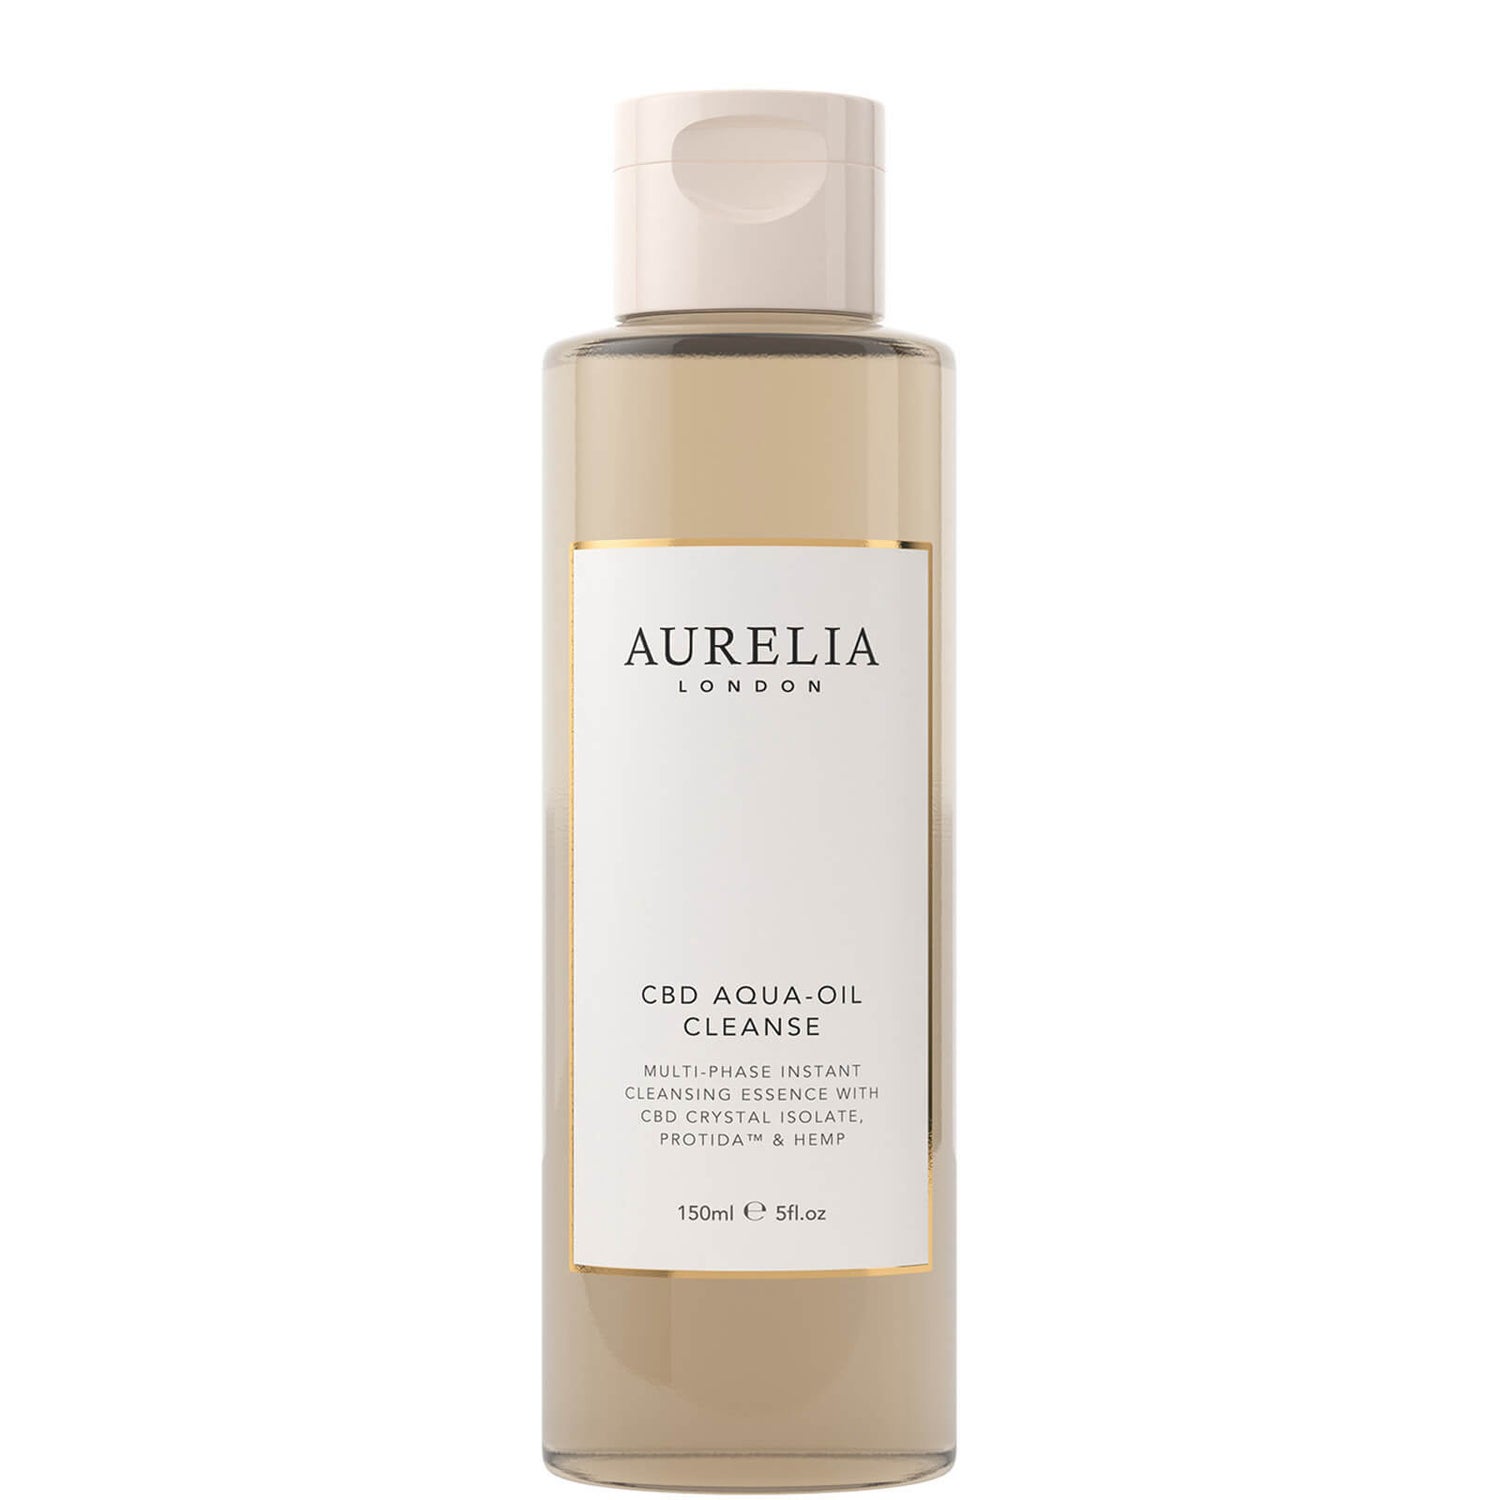 Aurelia London CBD Aqua-Oil Cleanse 150ml